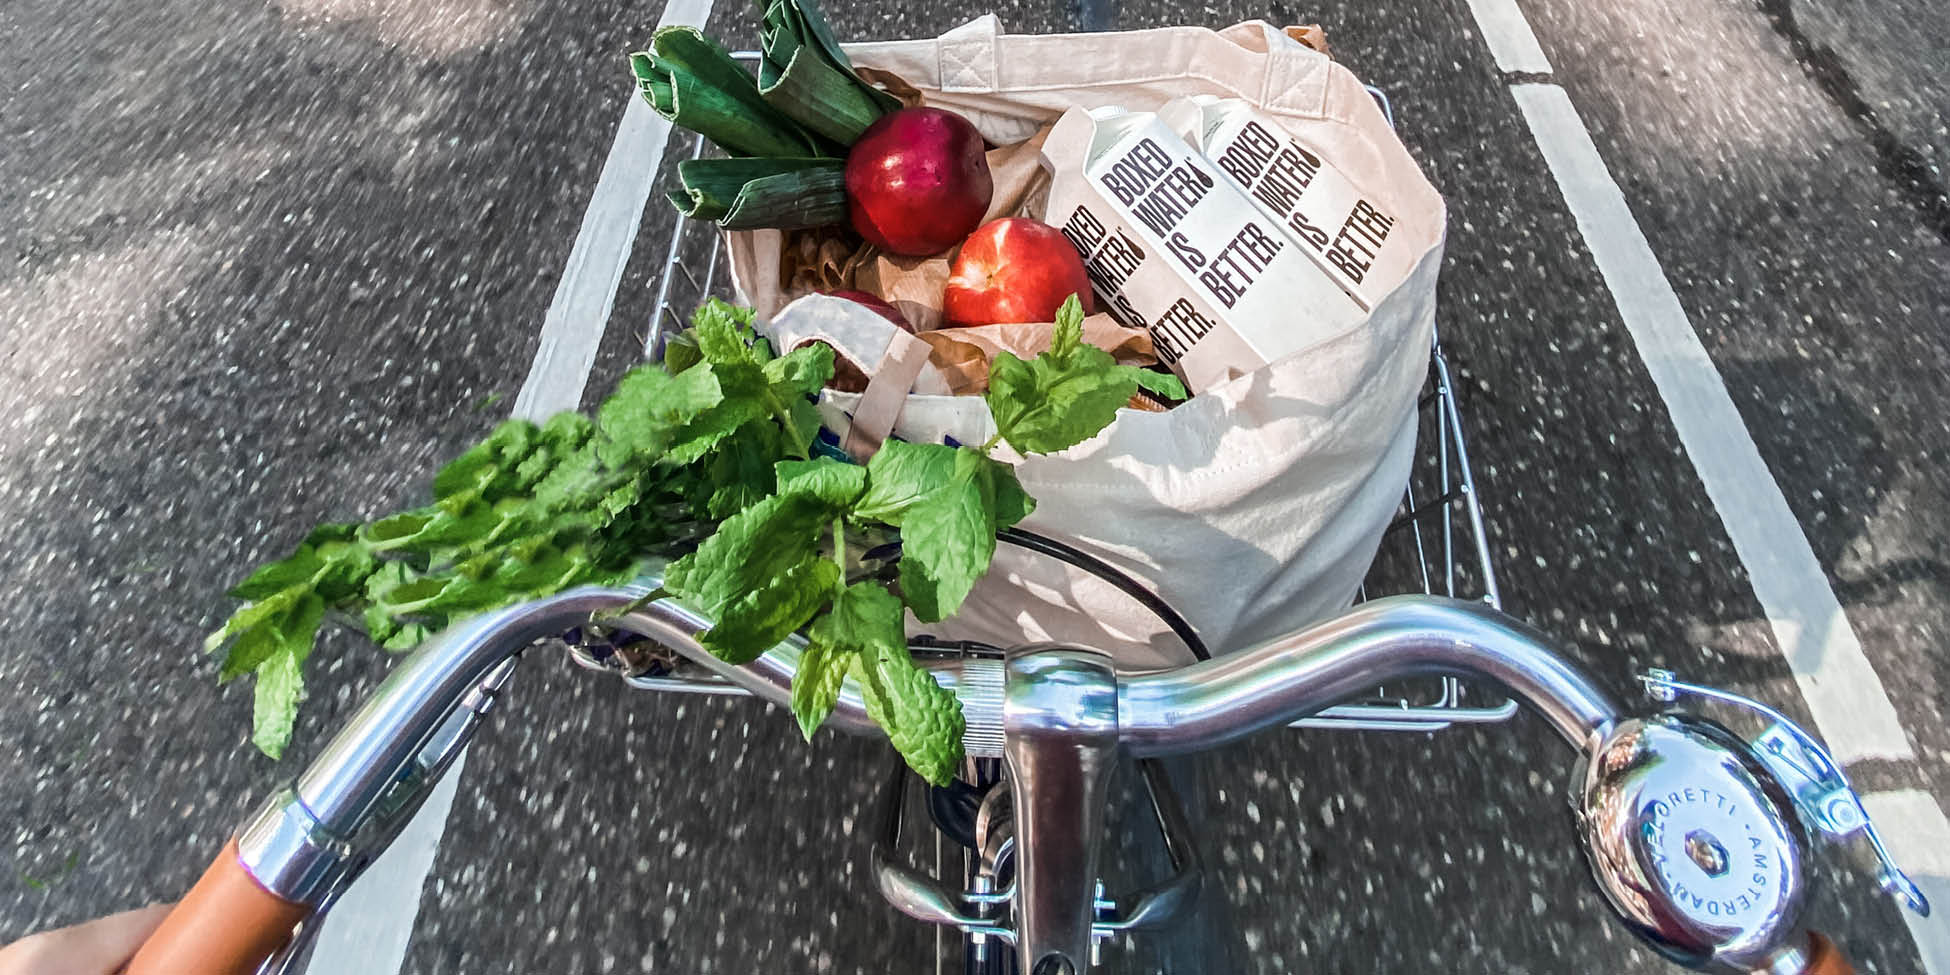 basket of food on bicycle